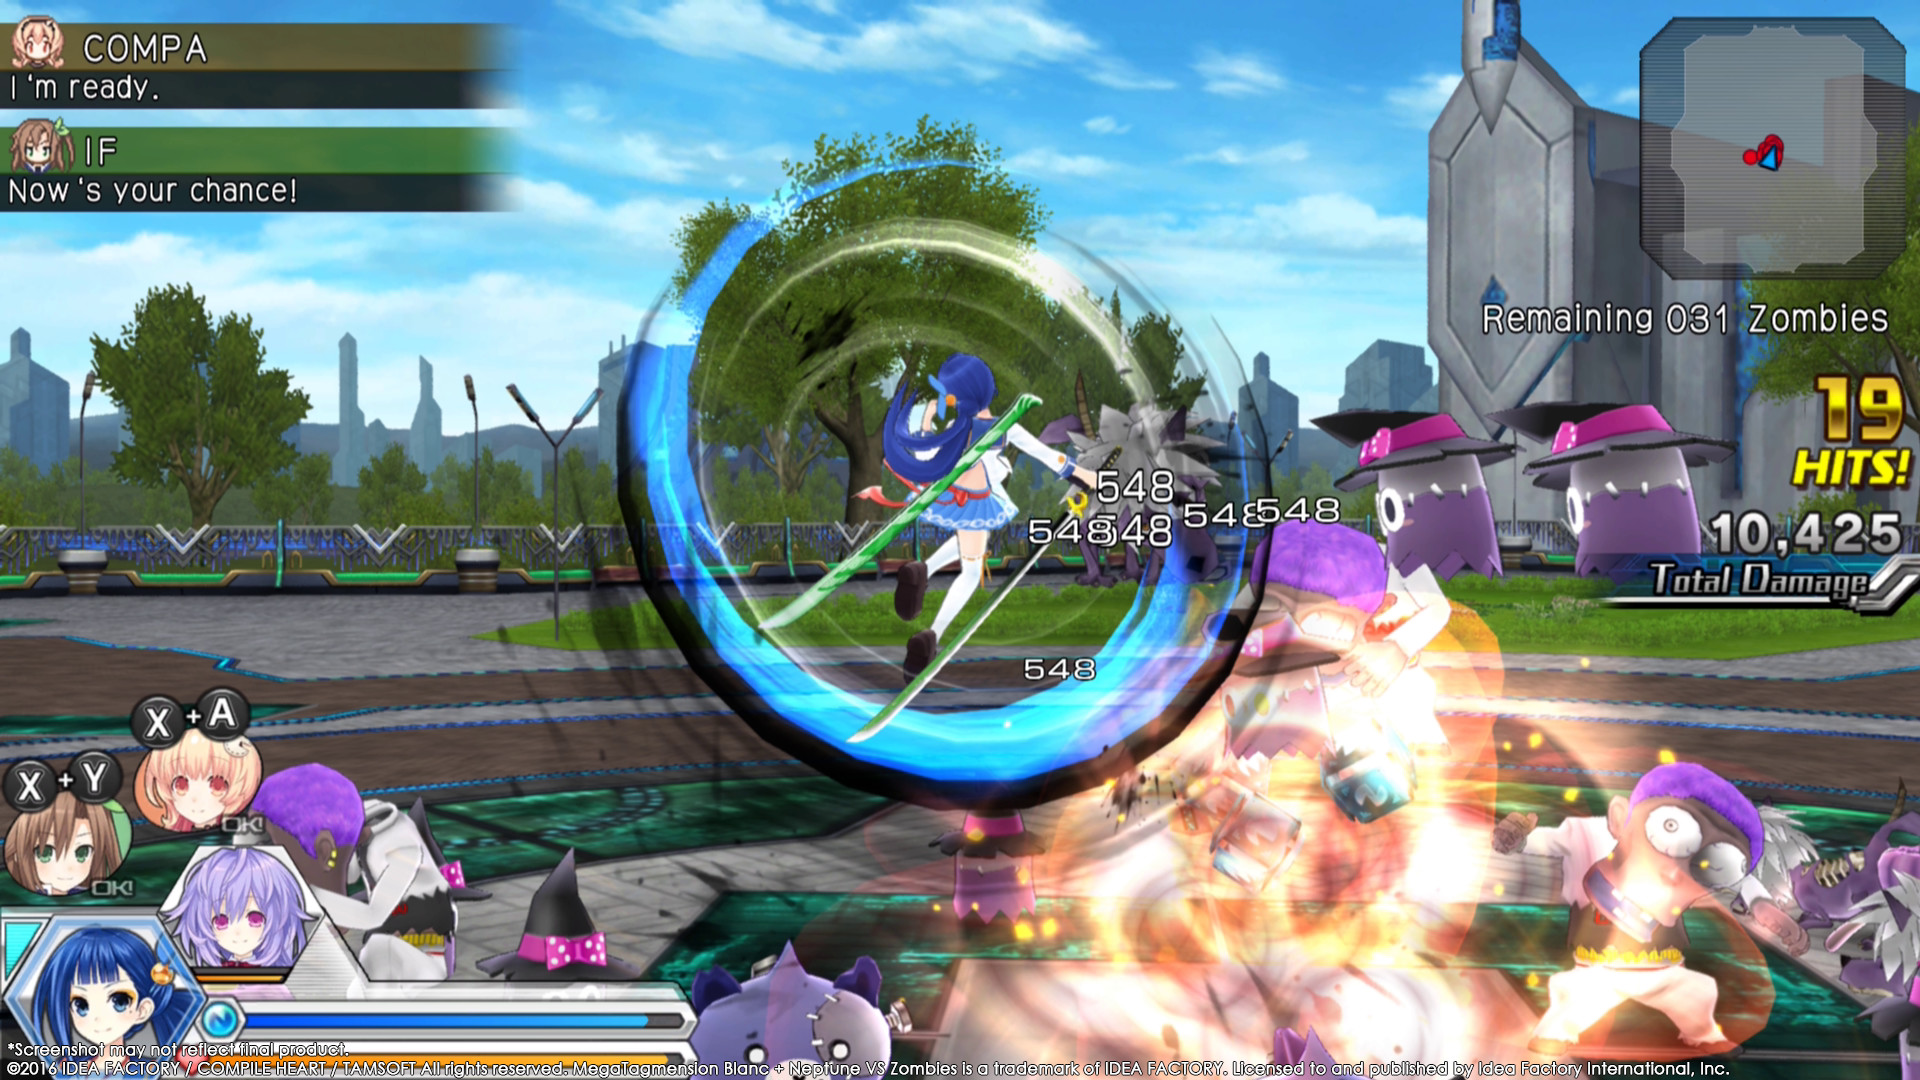 MegaTagmension Blanc + Neptune VS Zombies (Neptunia) screenshot